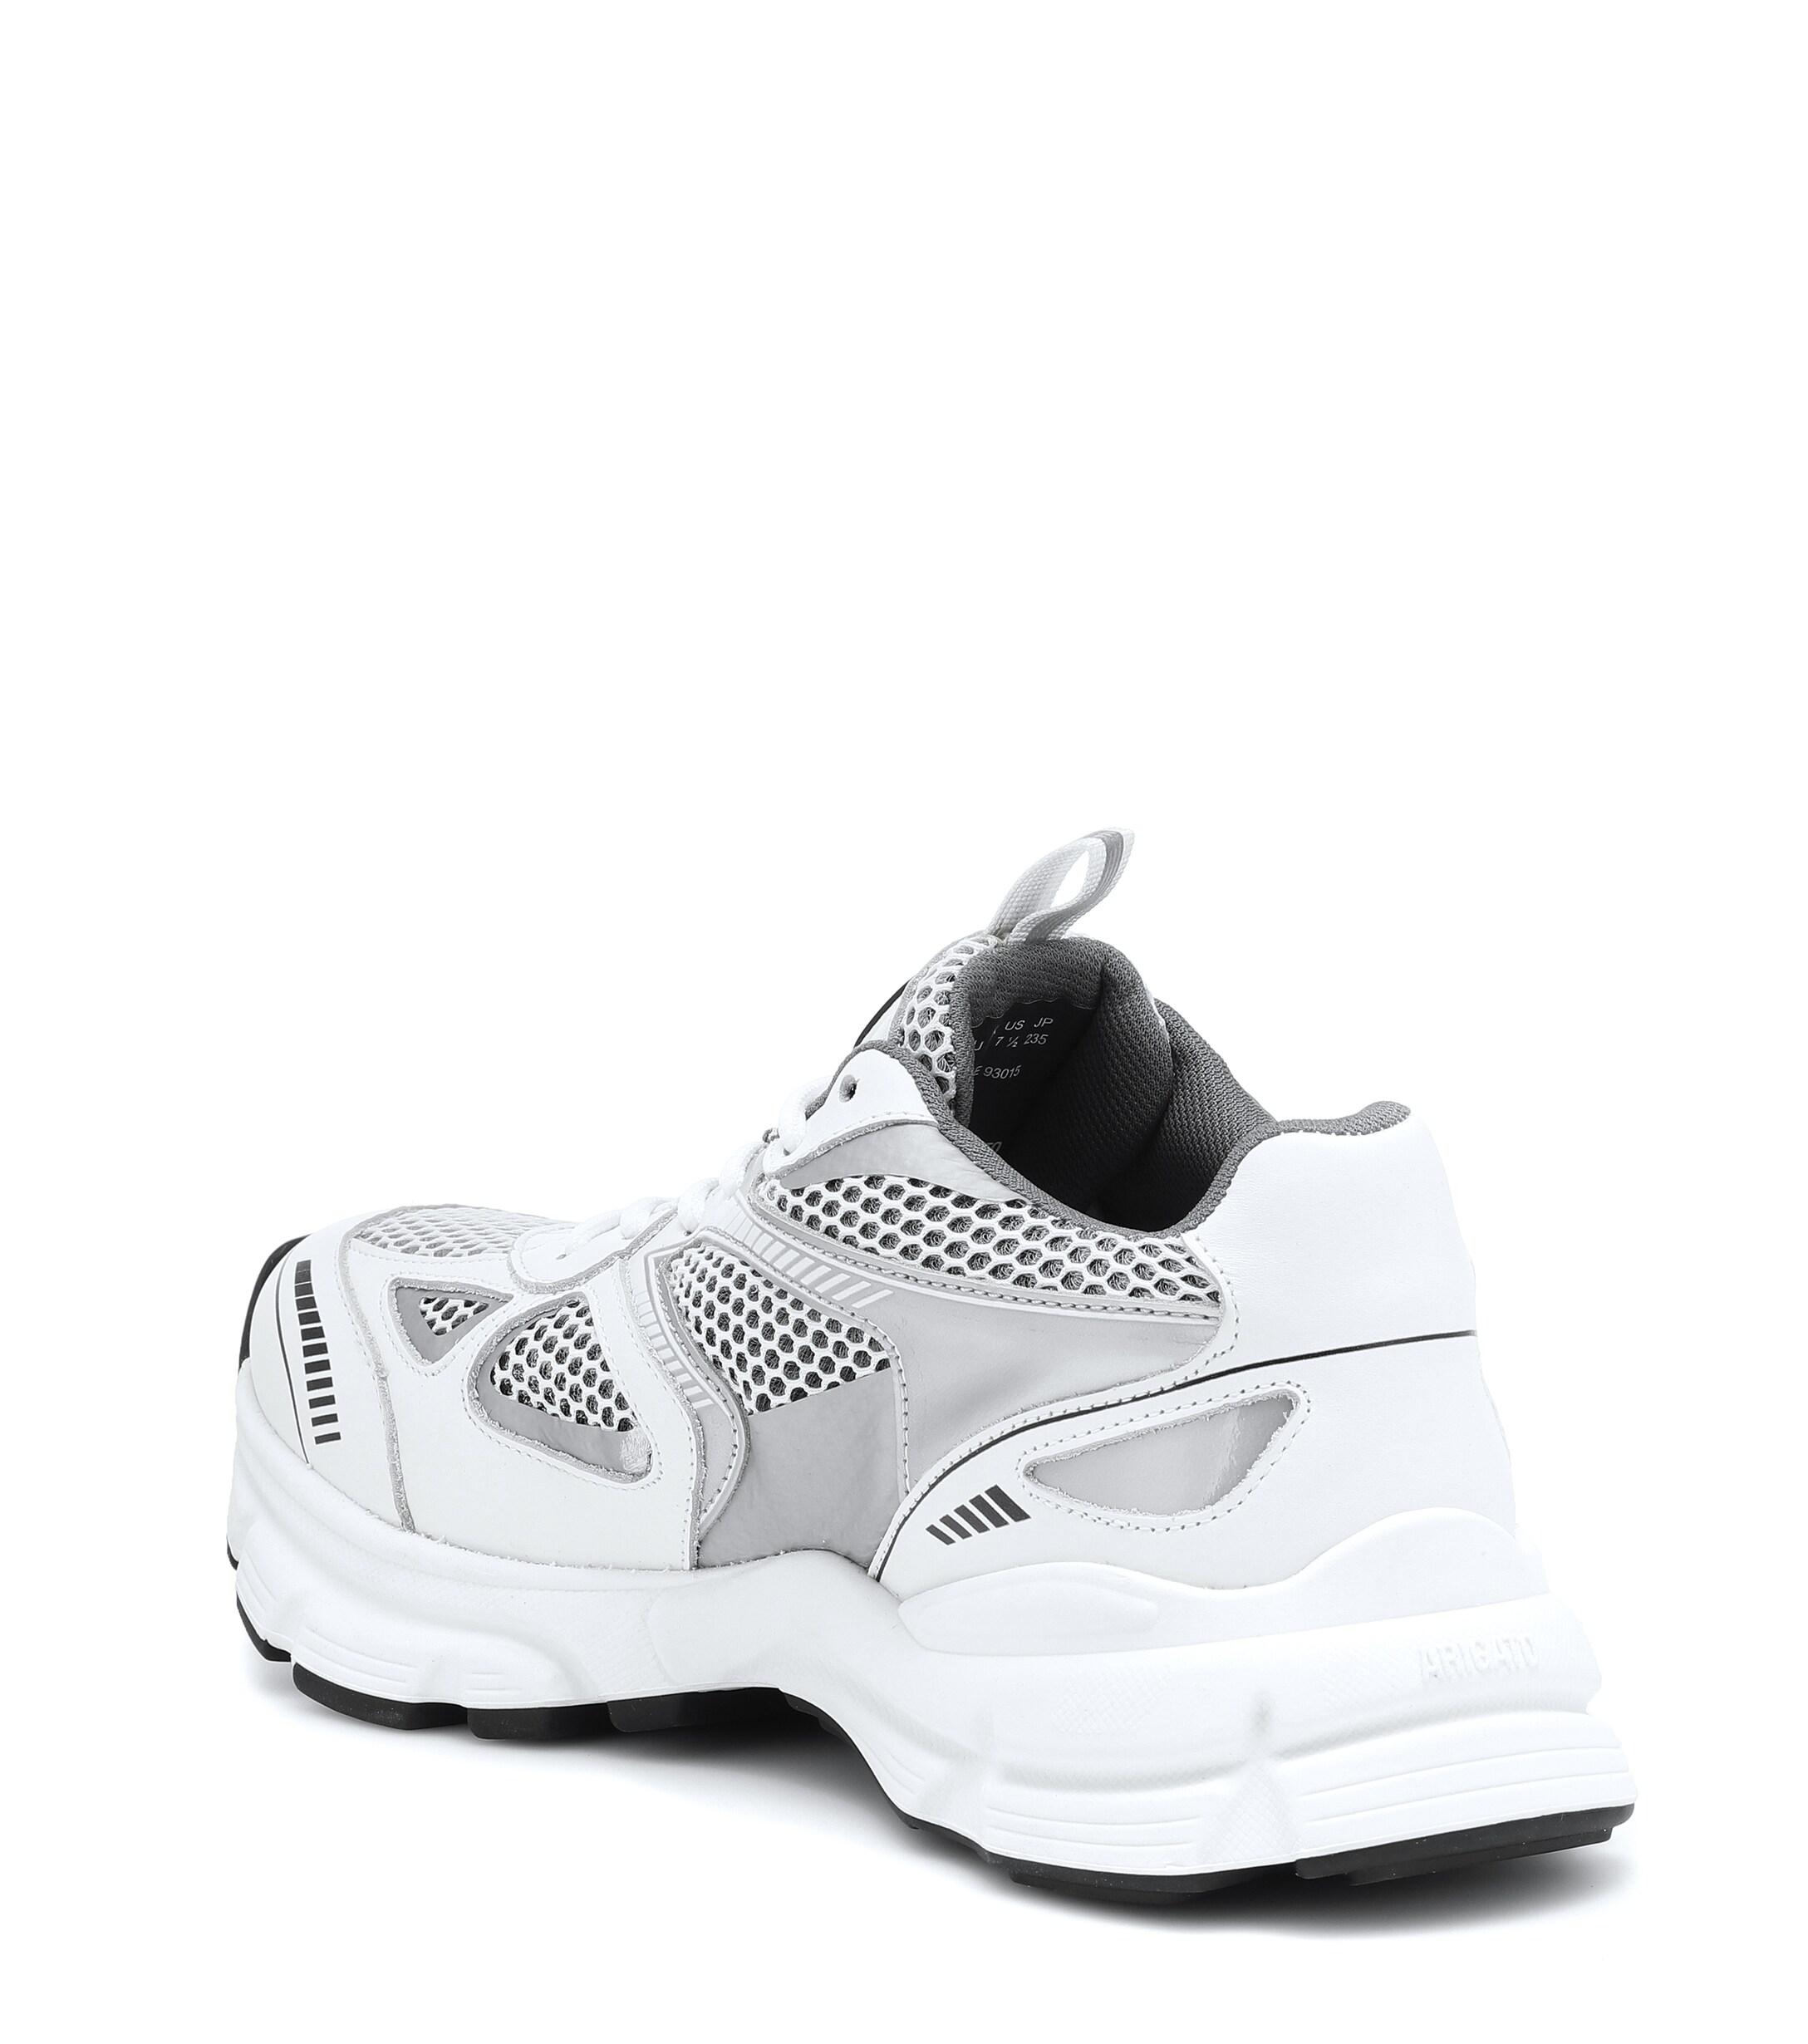 Axel Arigato Marathon Runner Leather Sneakers in White - Lyst